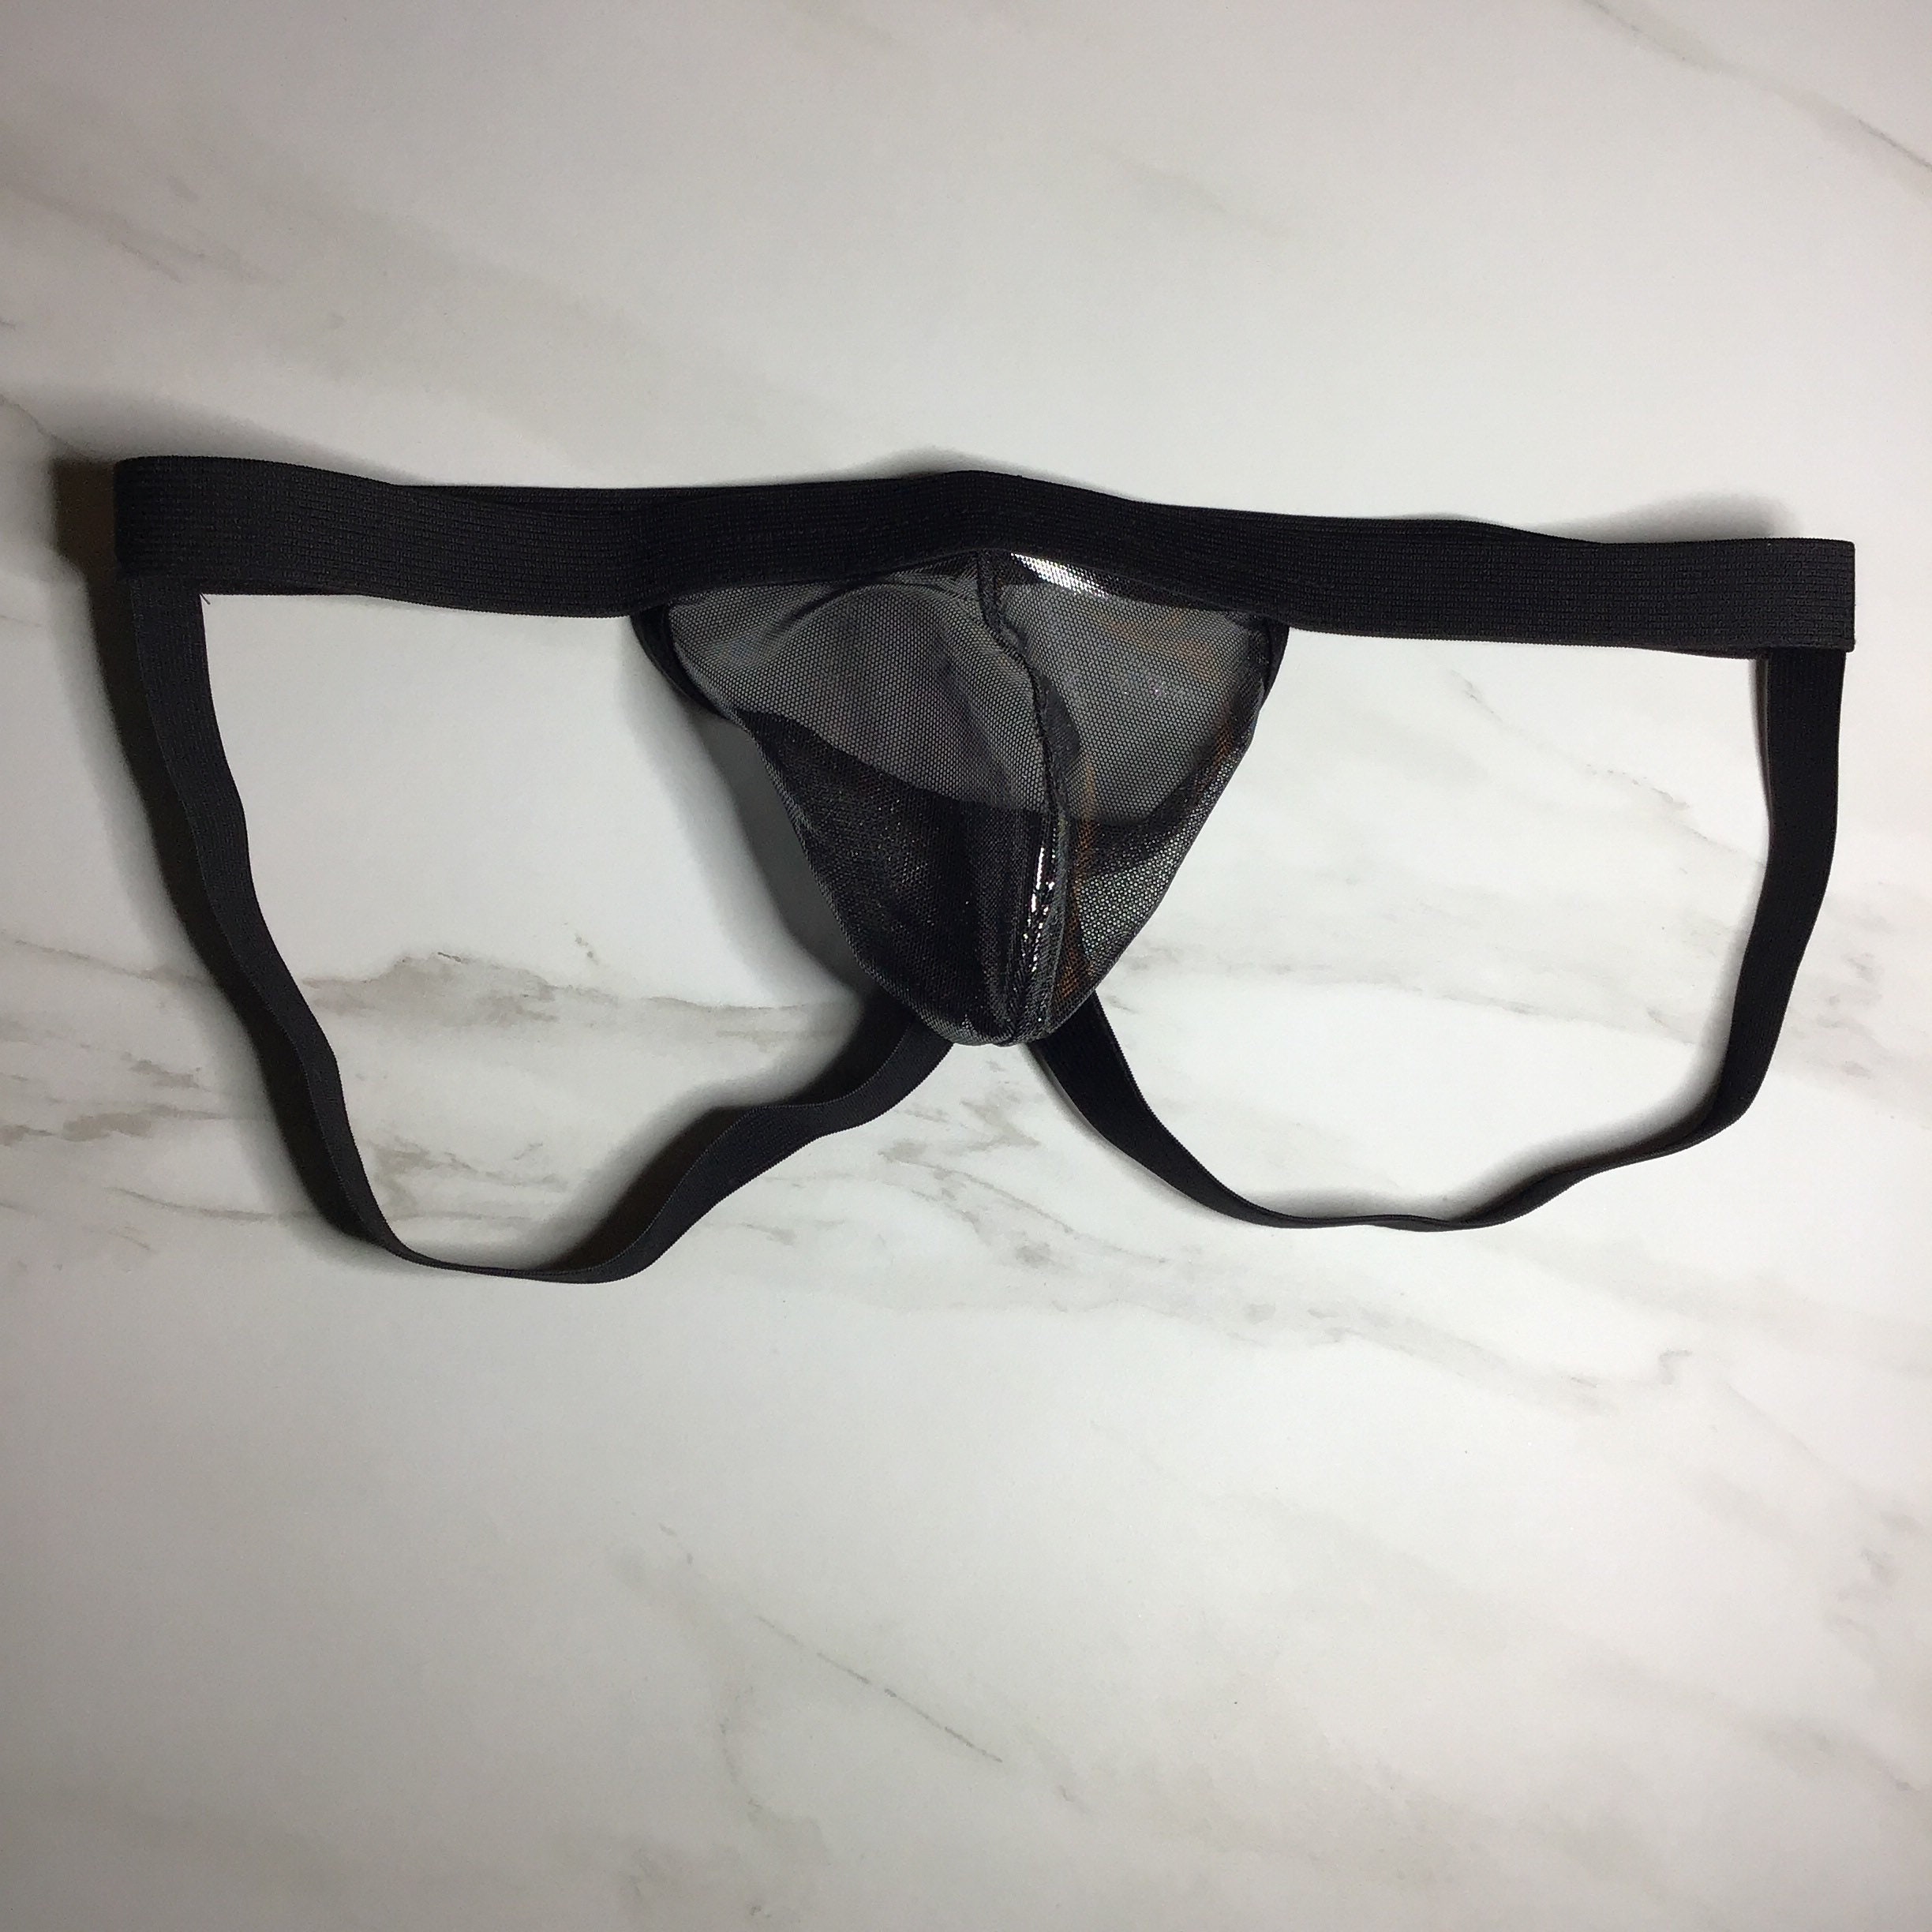 See-Through Mesh Jockstrap Transparent Mens Underwear in Two | Etsy